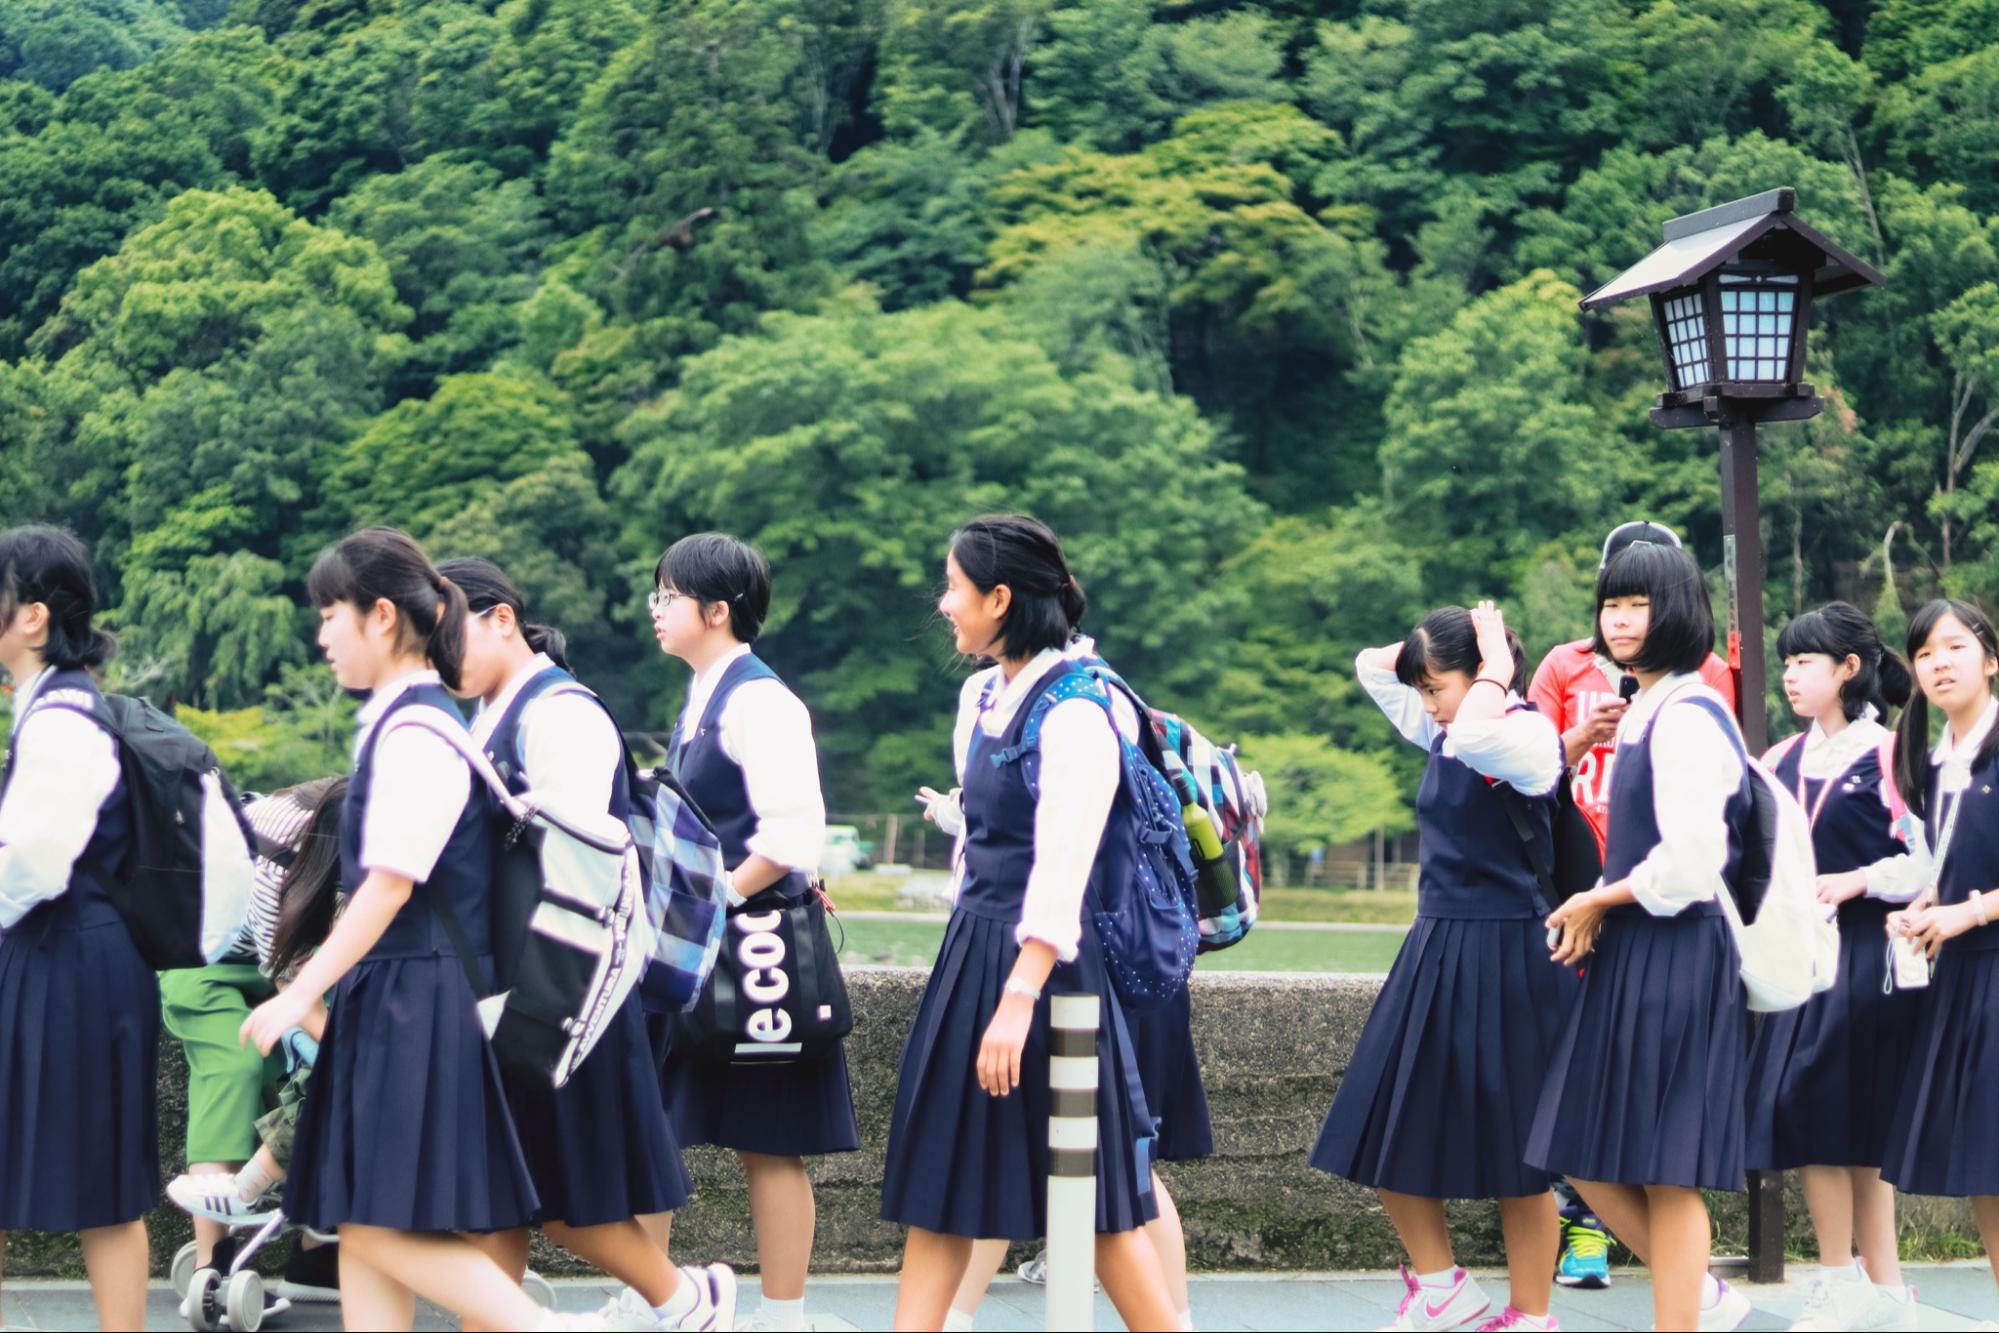 japanese schools ban ponytails - japanese schoolgirls